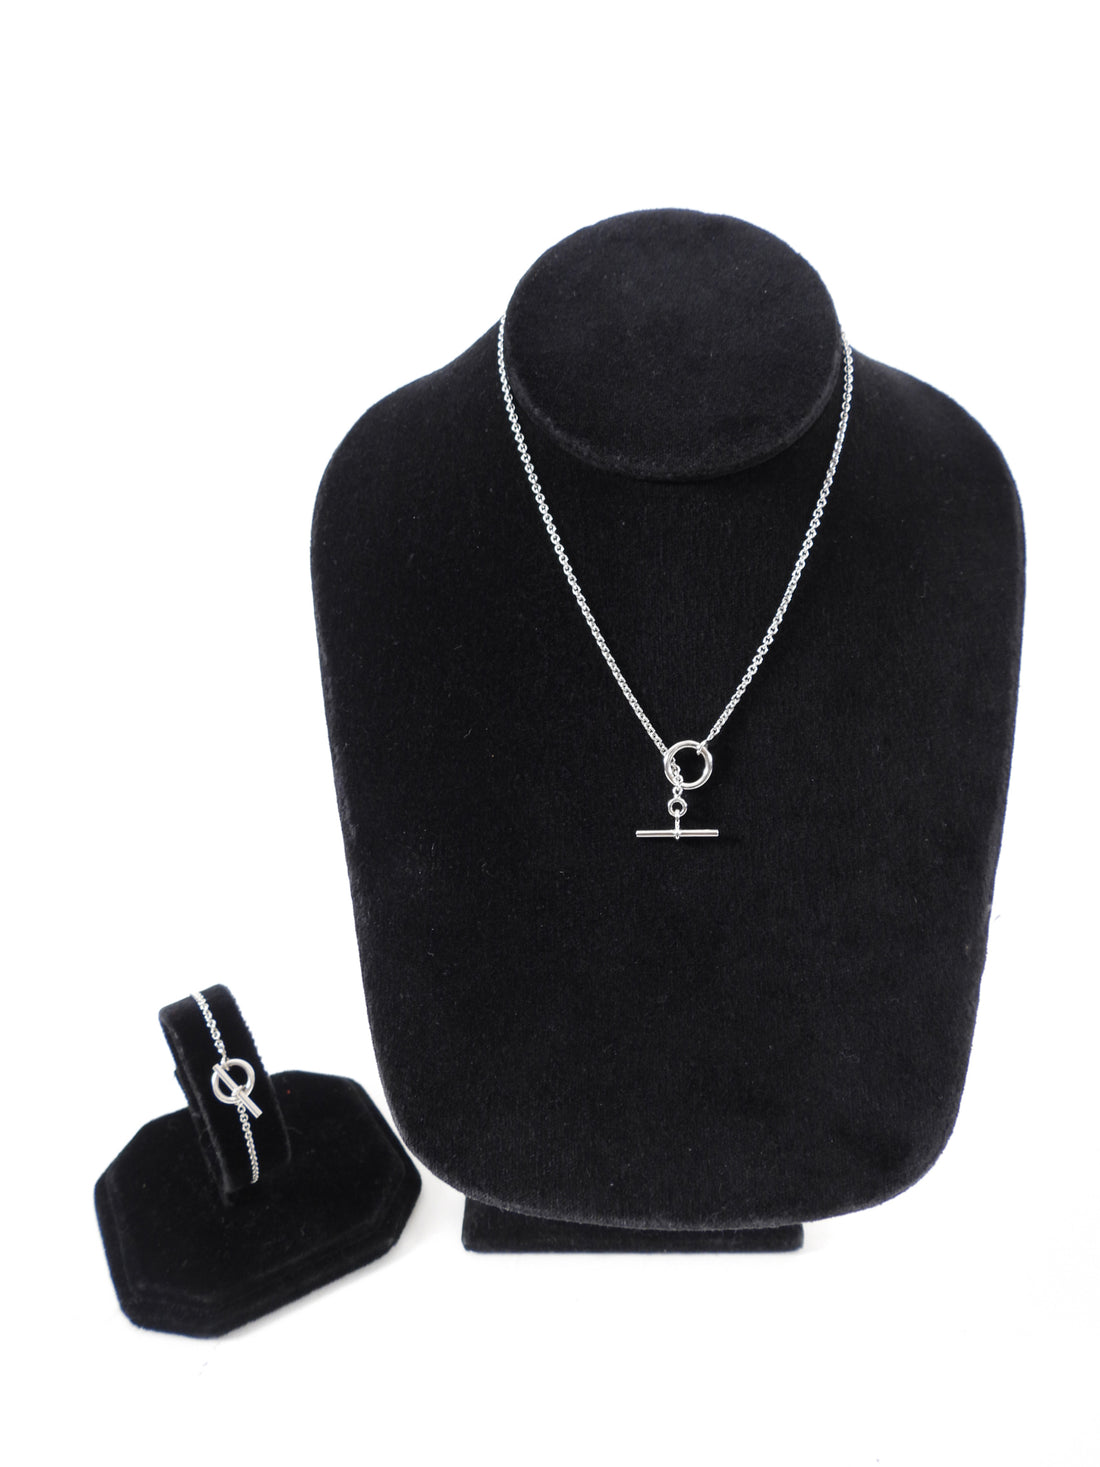 Hermes 18k White Gold Echappee Necklace and Bracelet Set